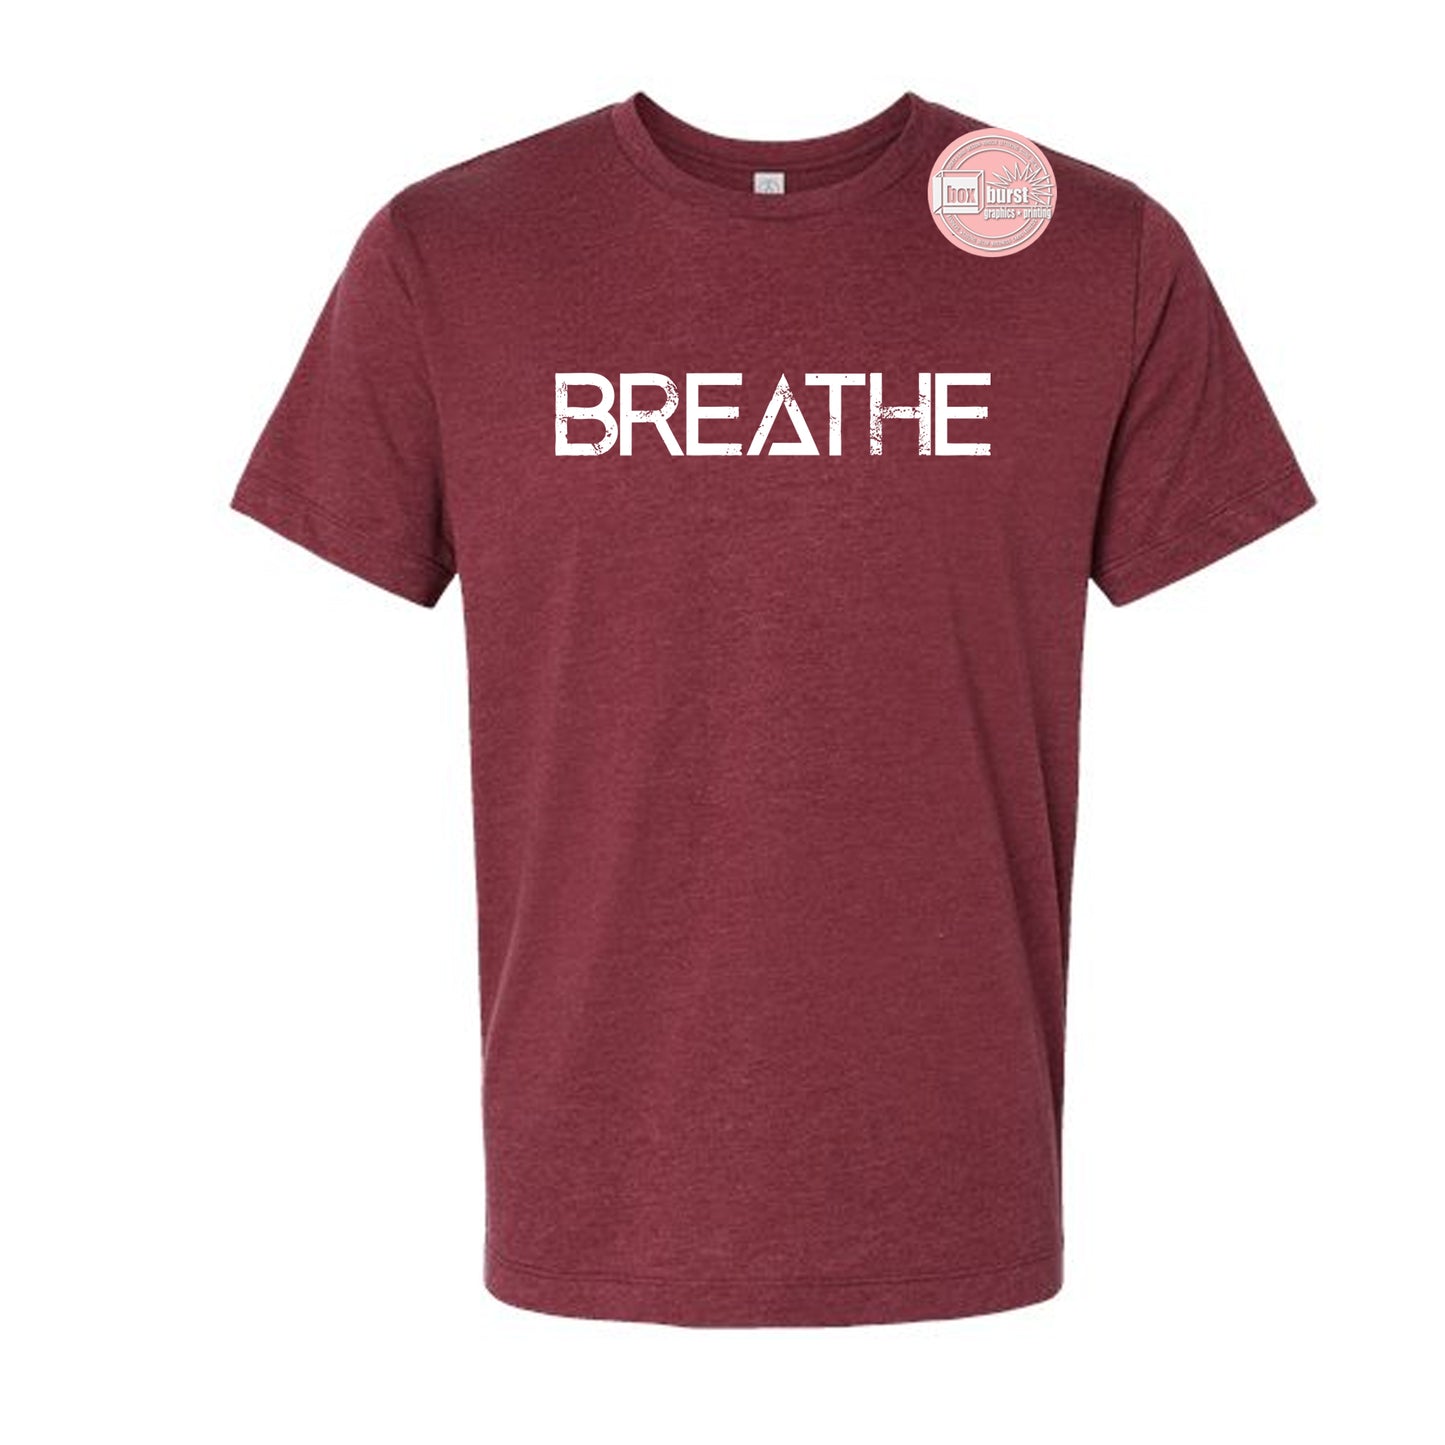 Breathe t-shirt mindfulness shirt